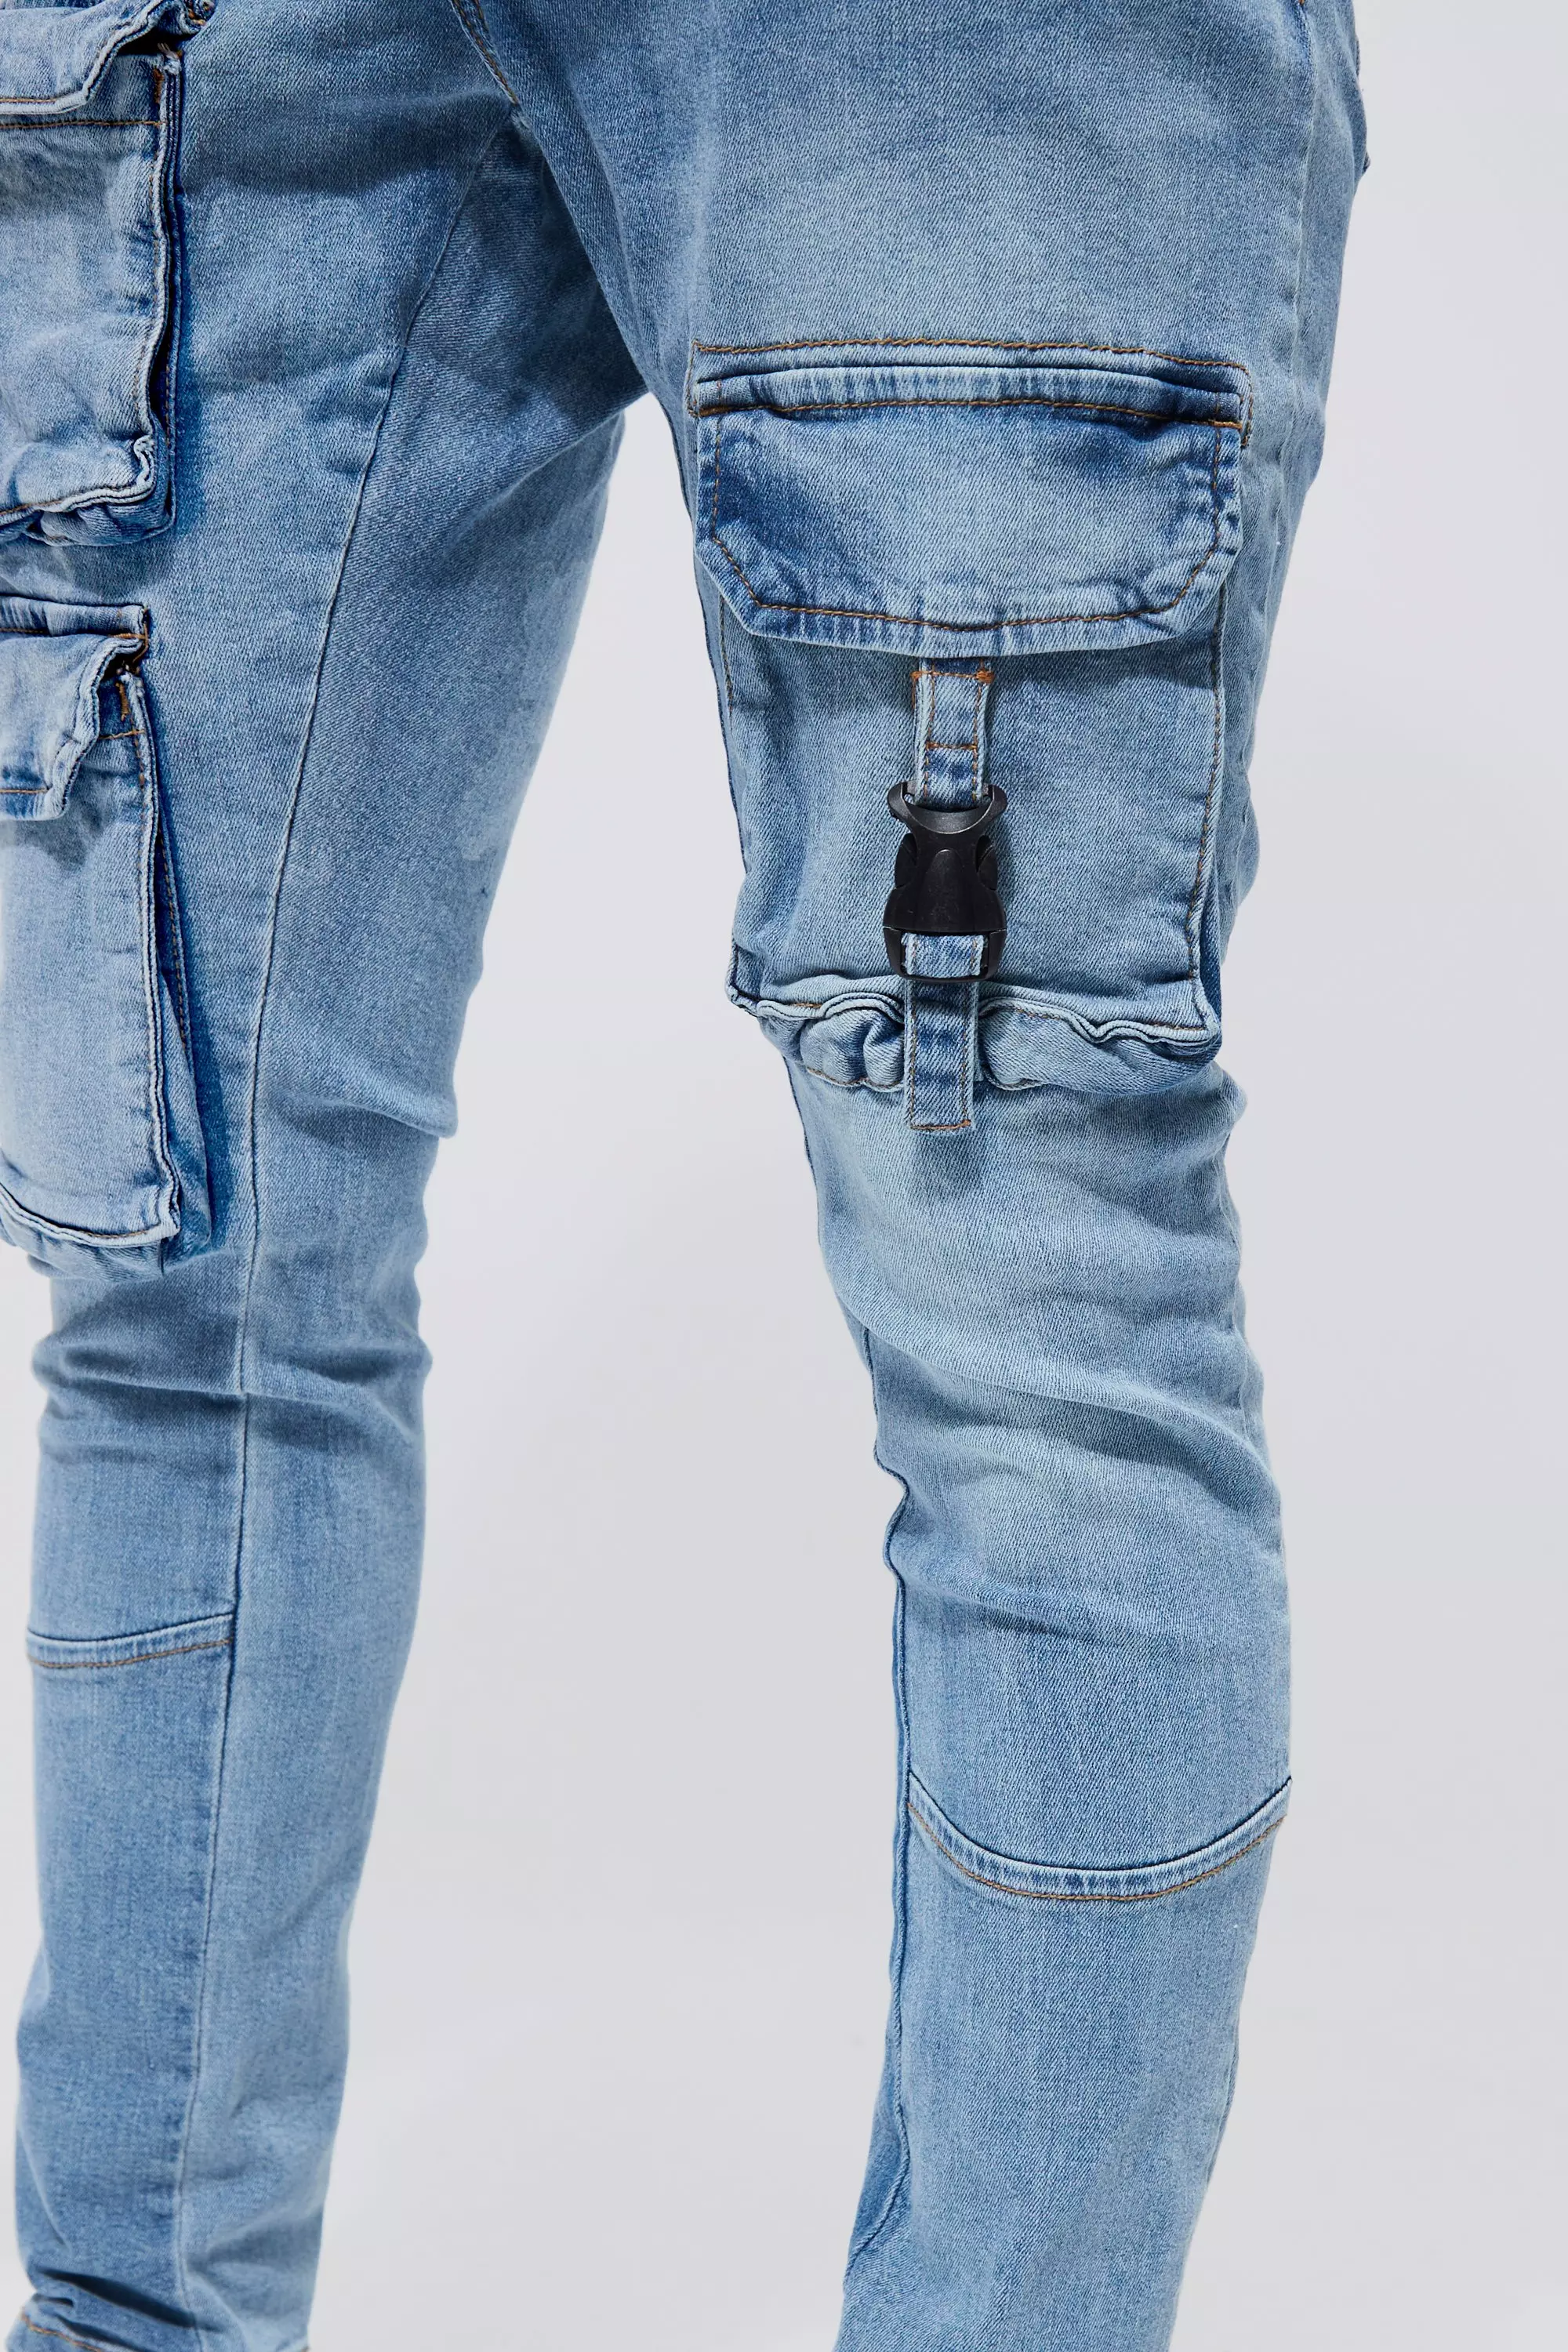 Bdg Men's 3D Pocket Cargo Pant